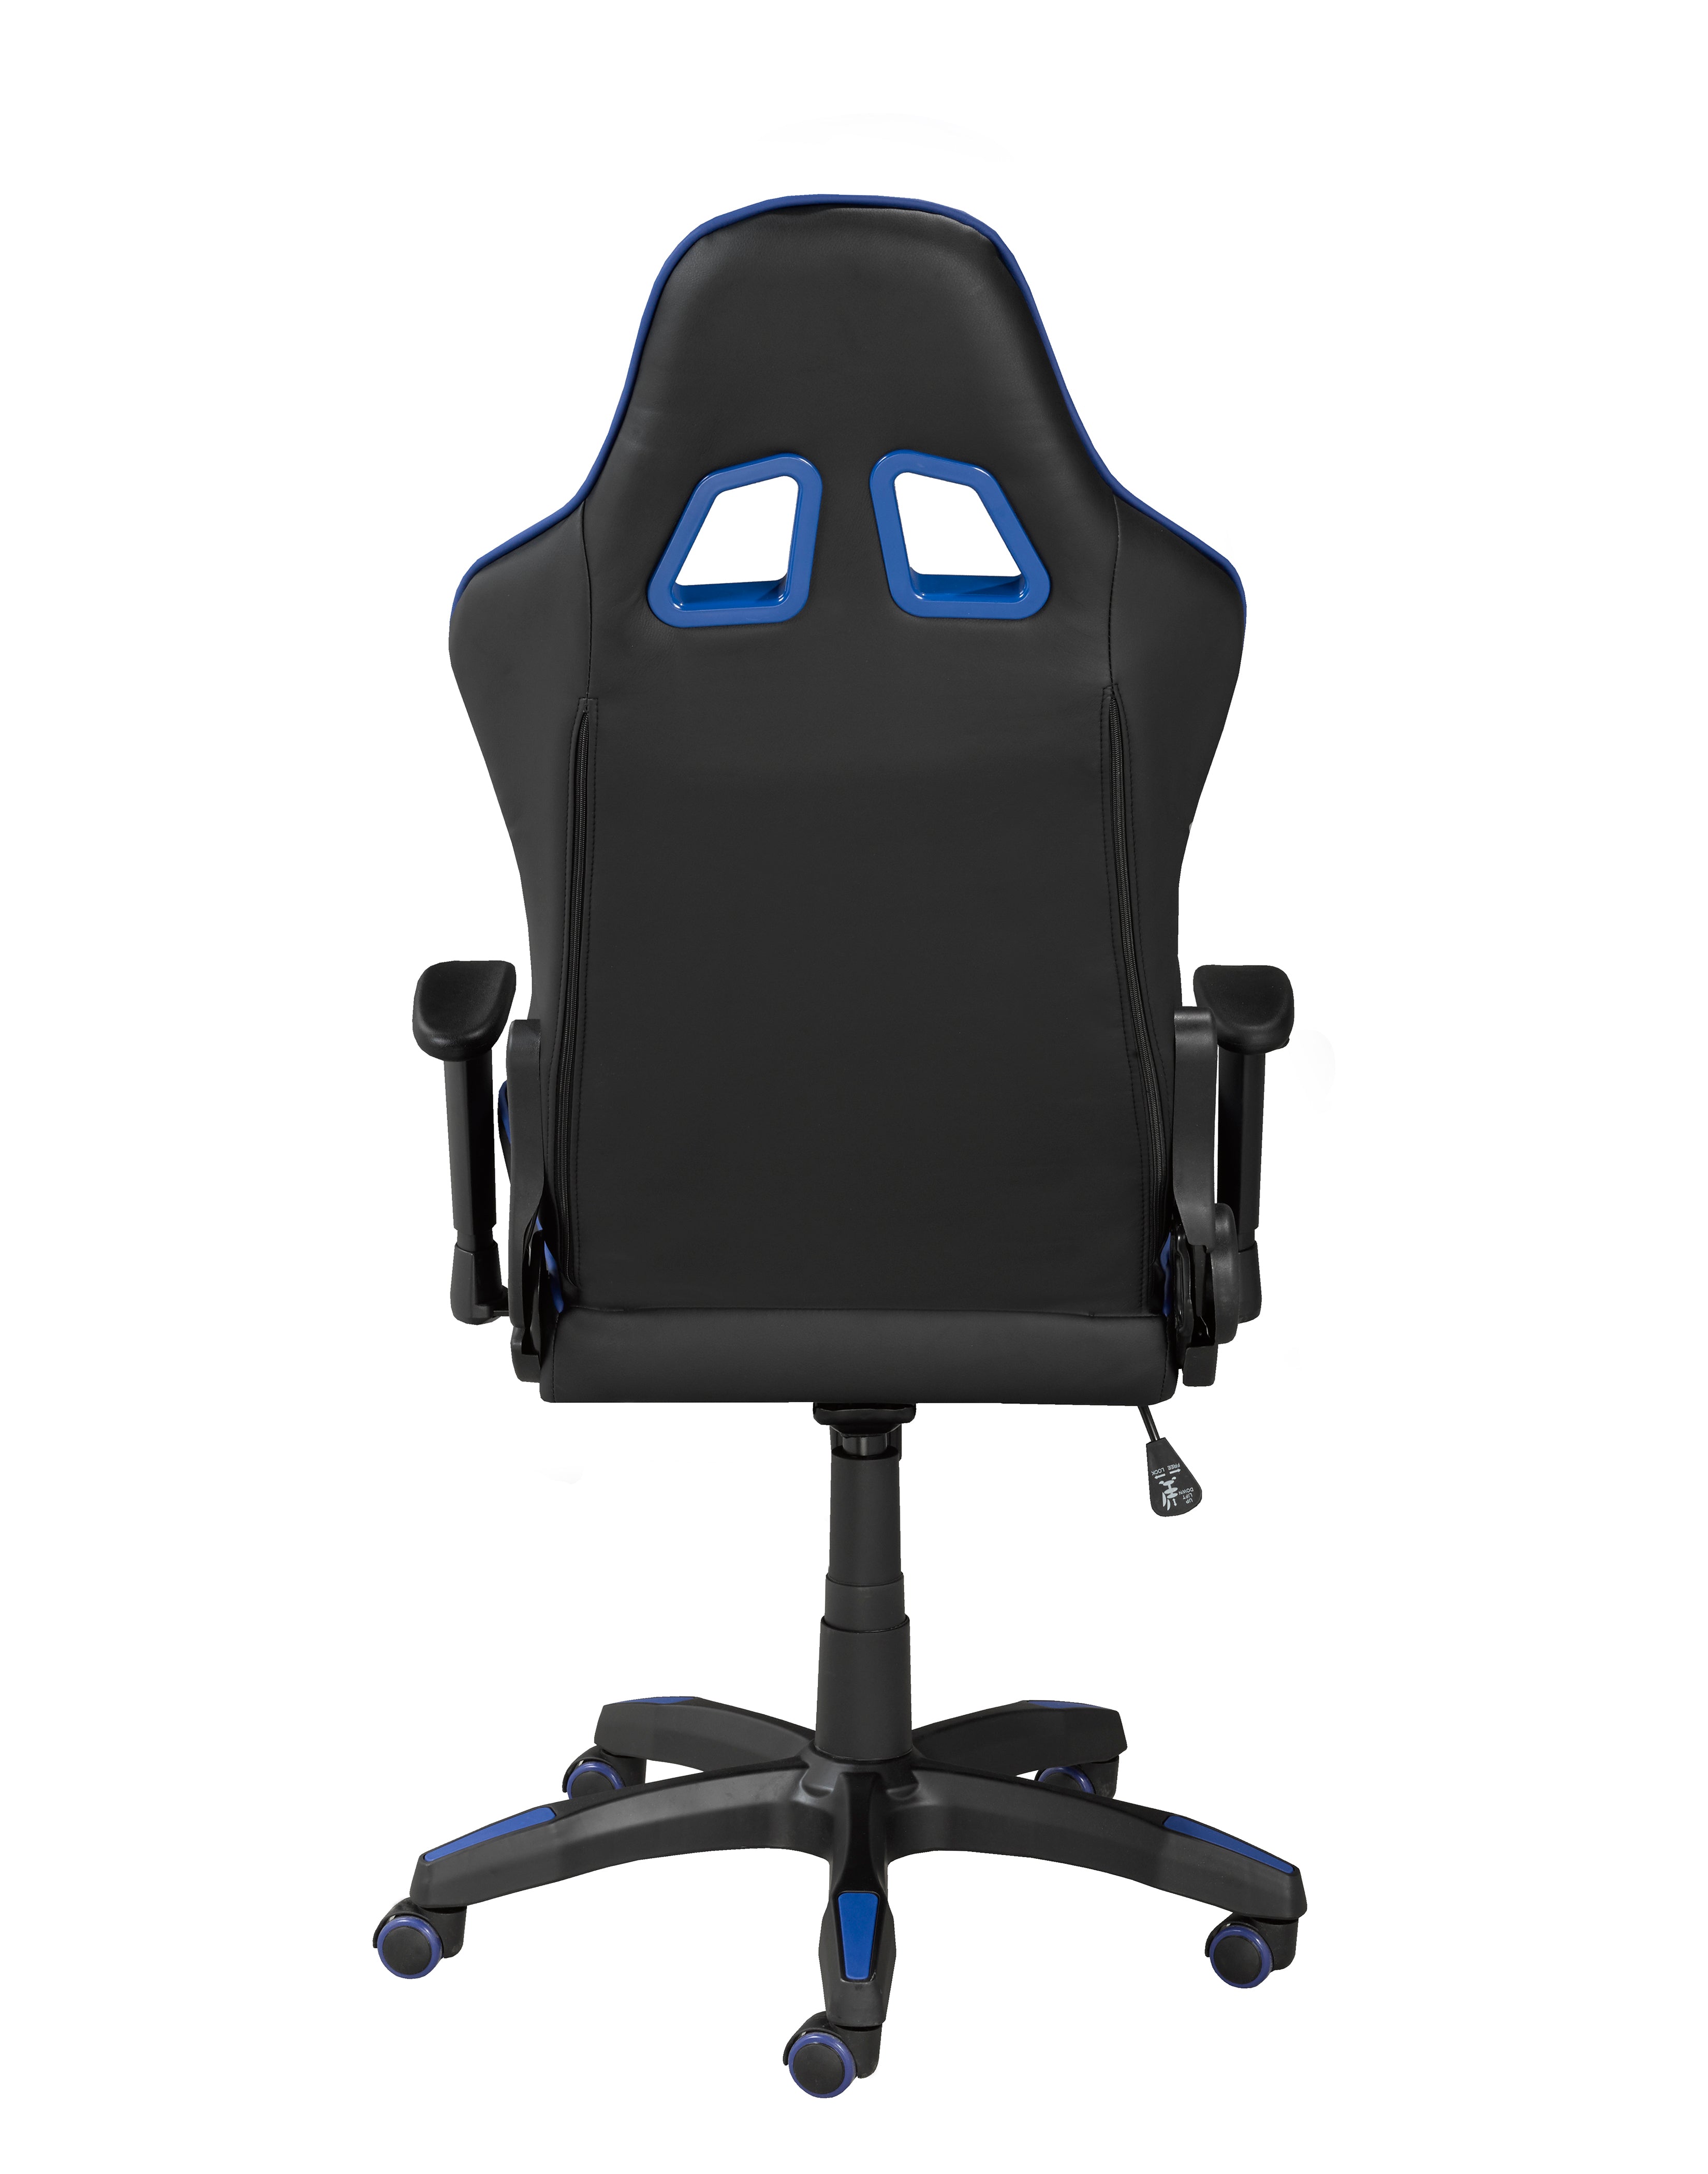 Blue Office Chair - 5100-BL